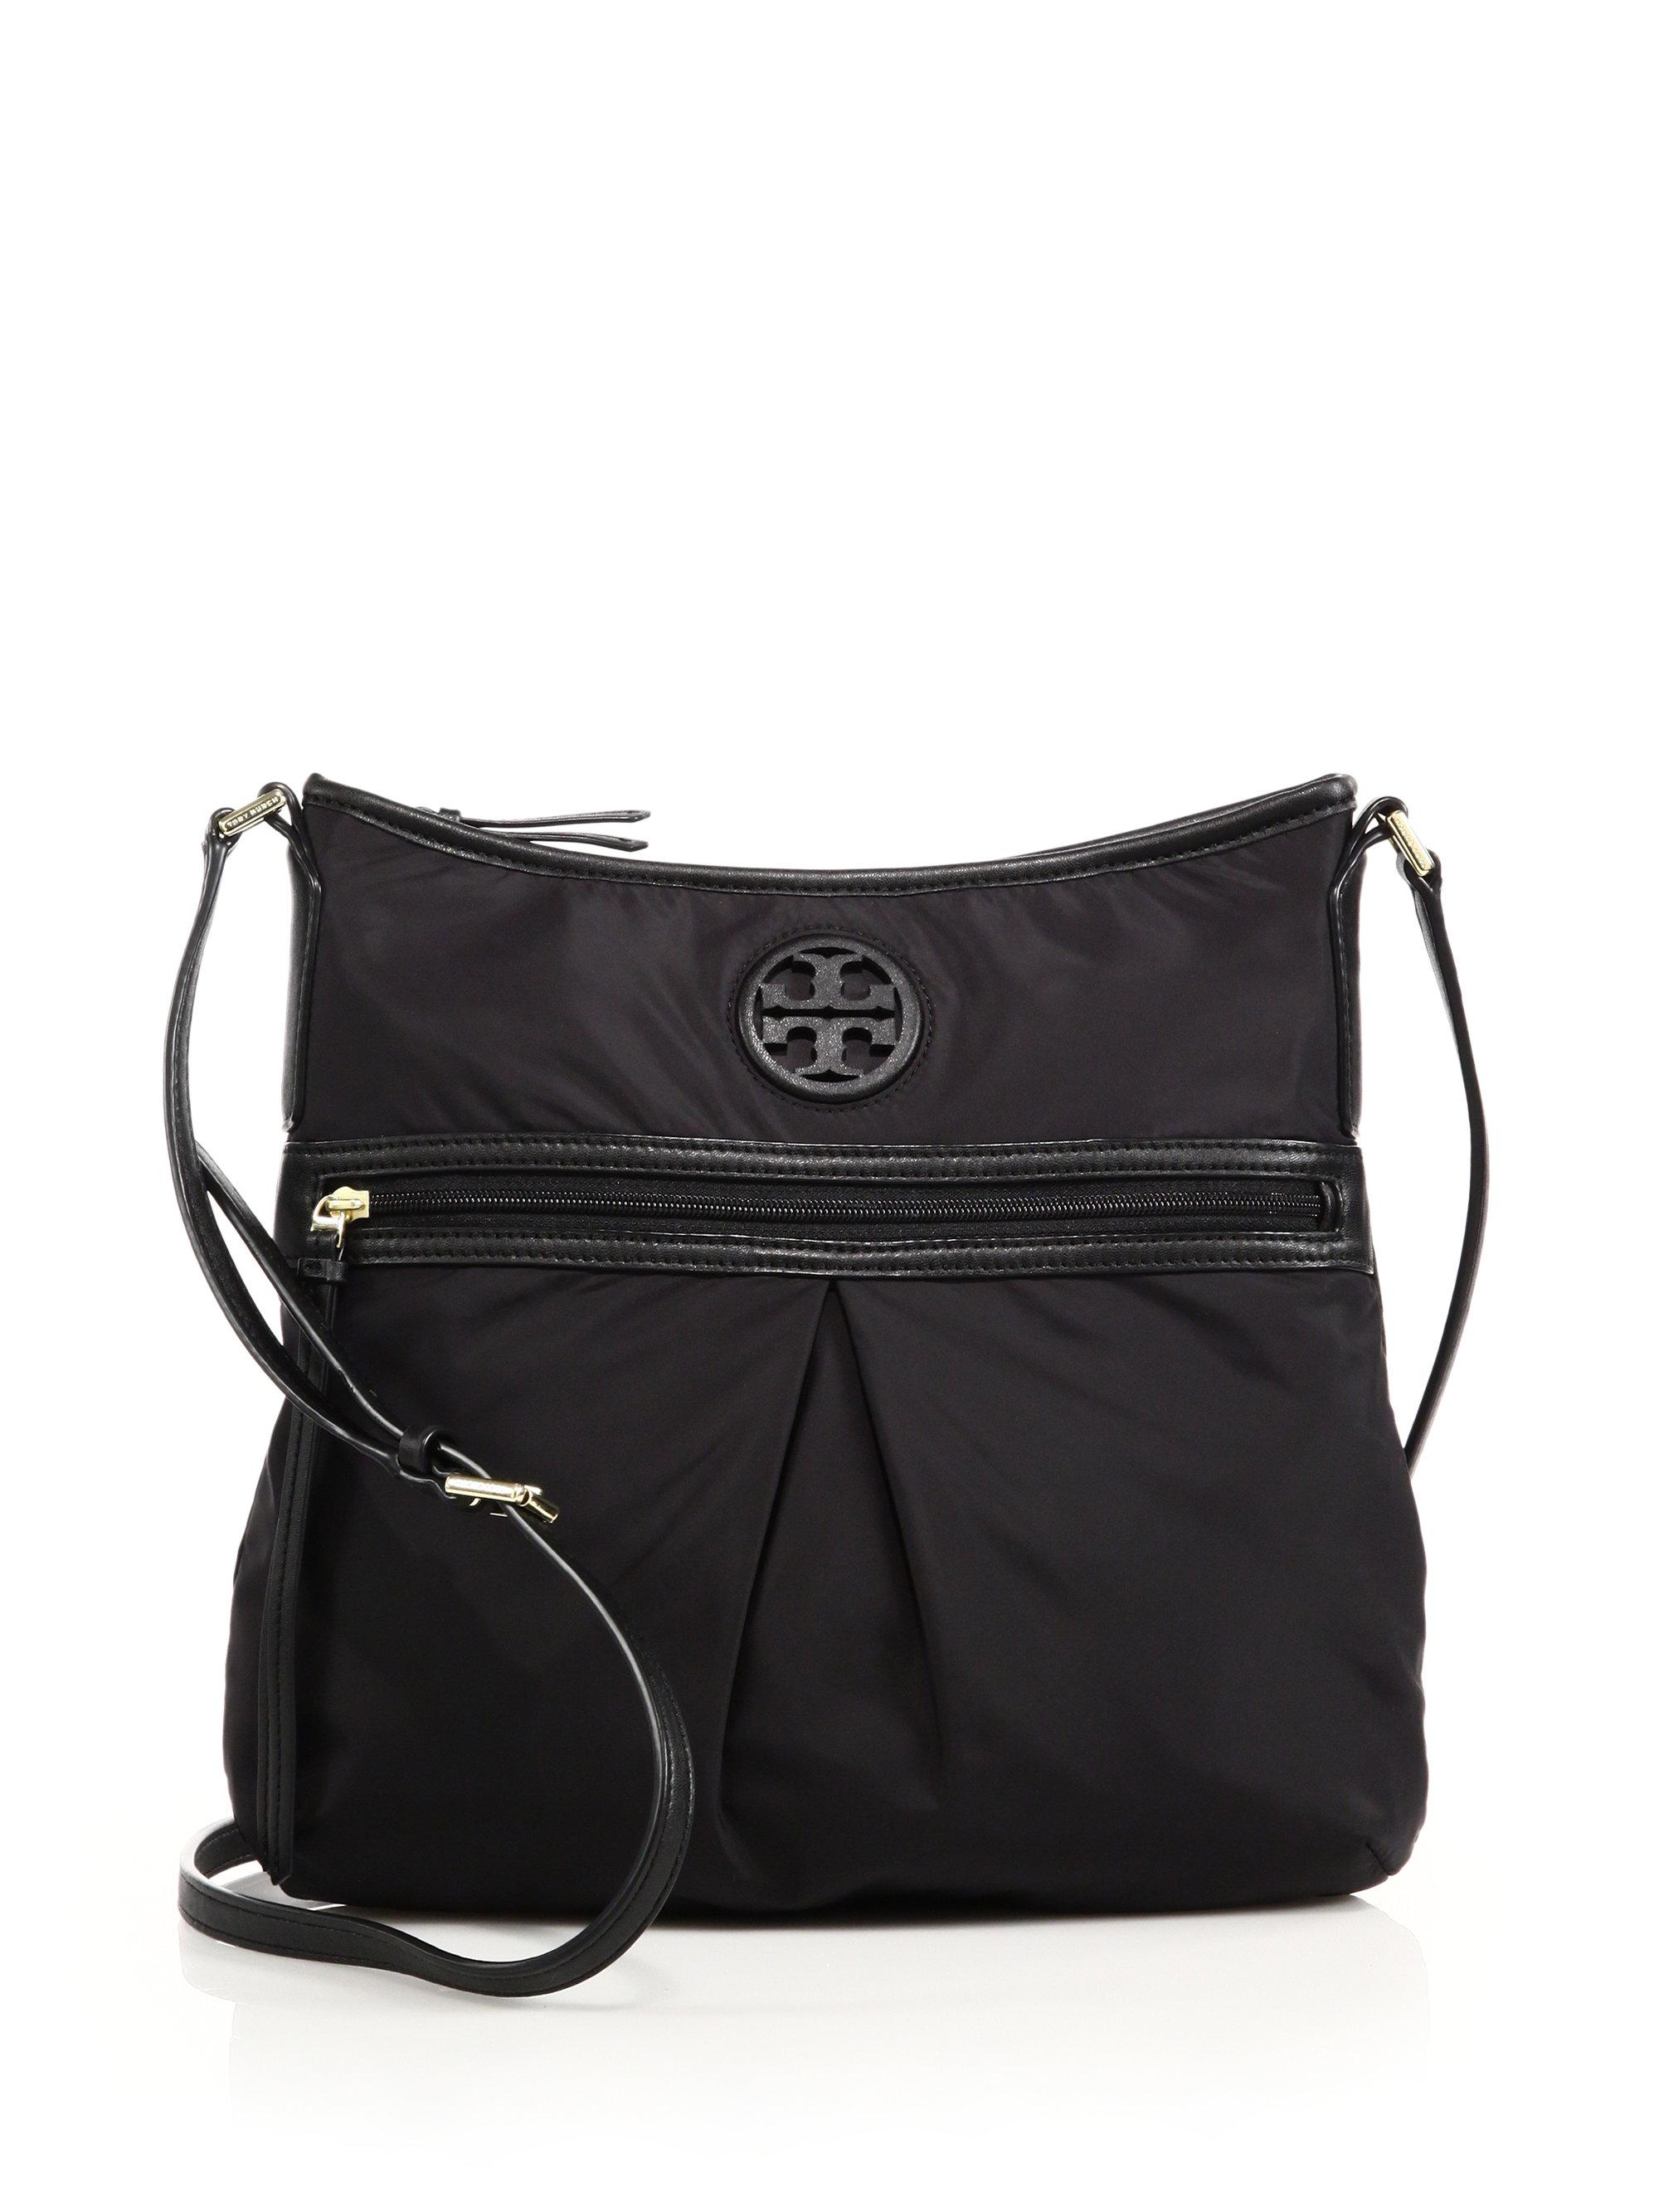 Tory Burch Synthetic Nylon & Leather Swingpack Crossbody Bag in Black - Lyst